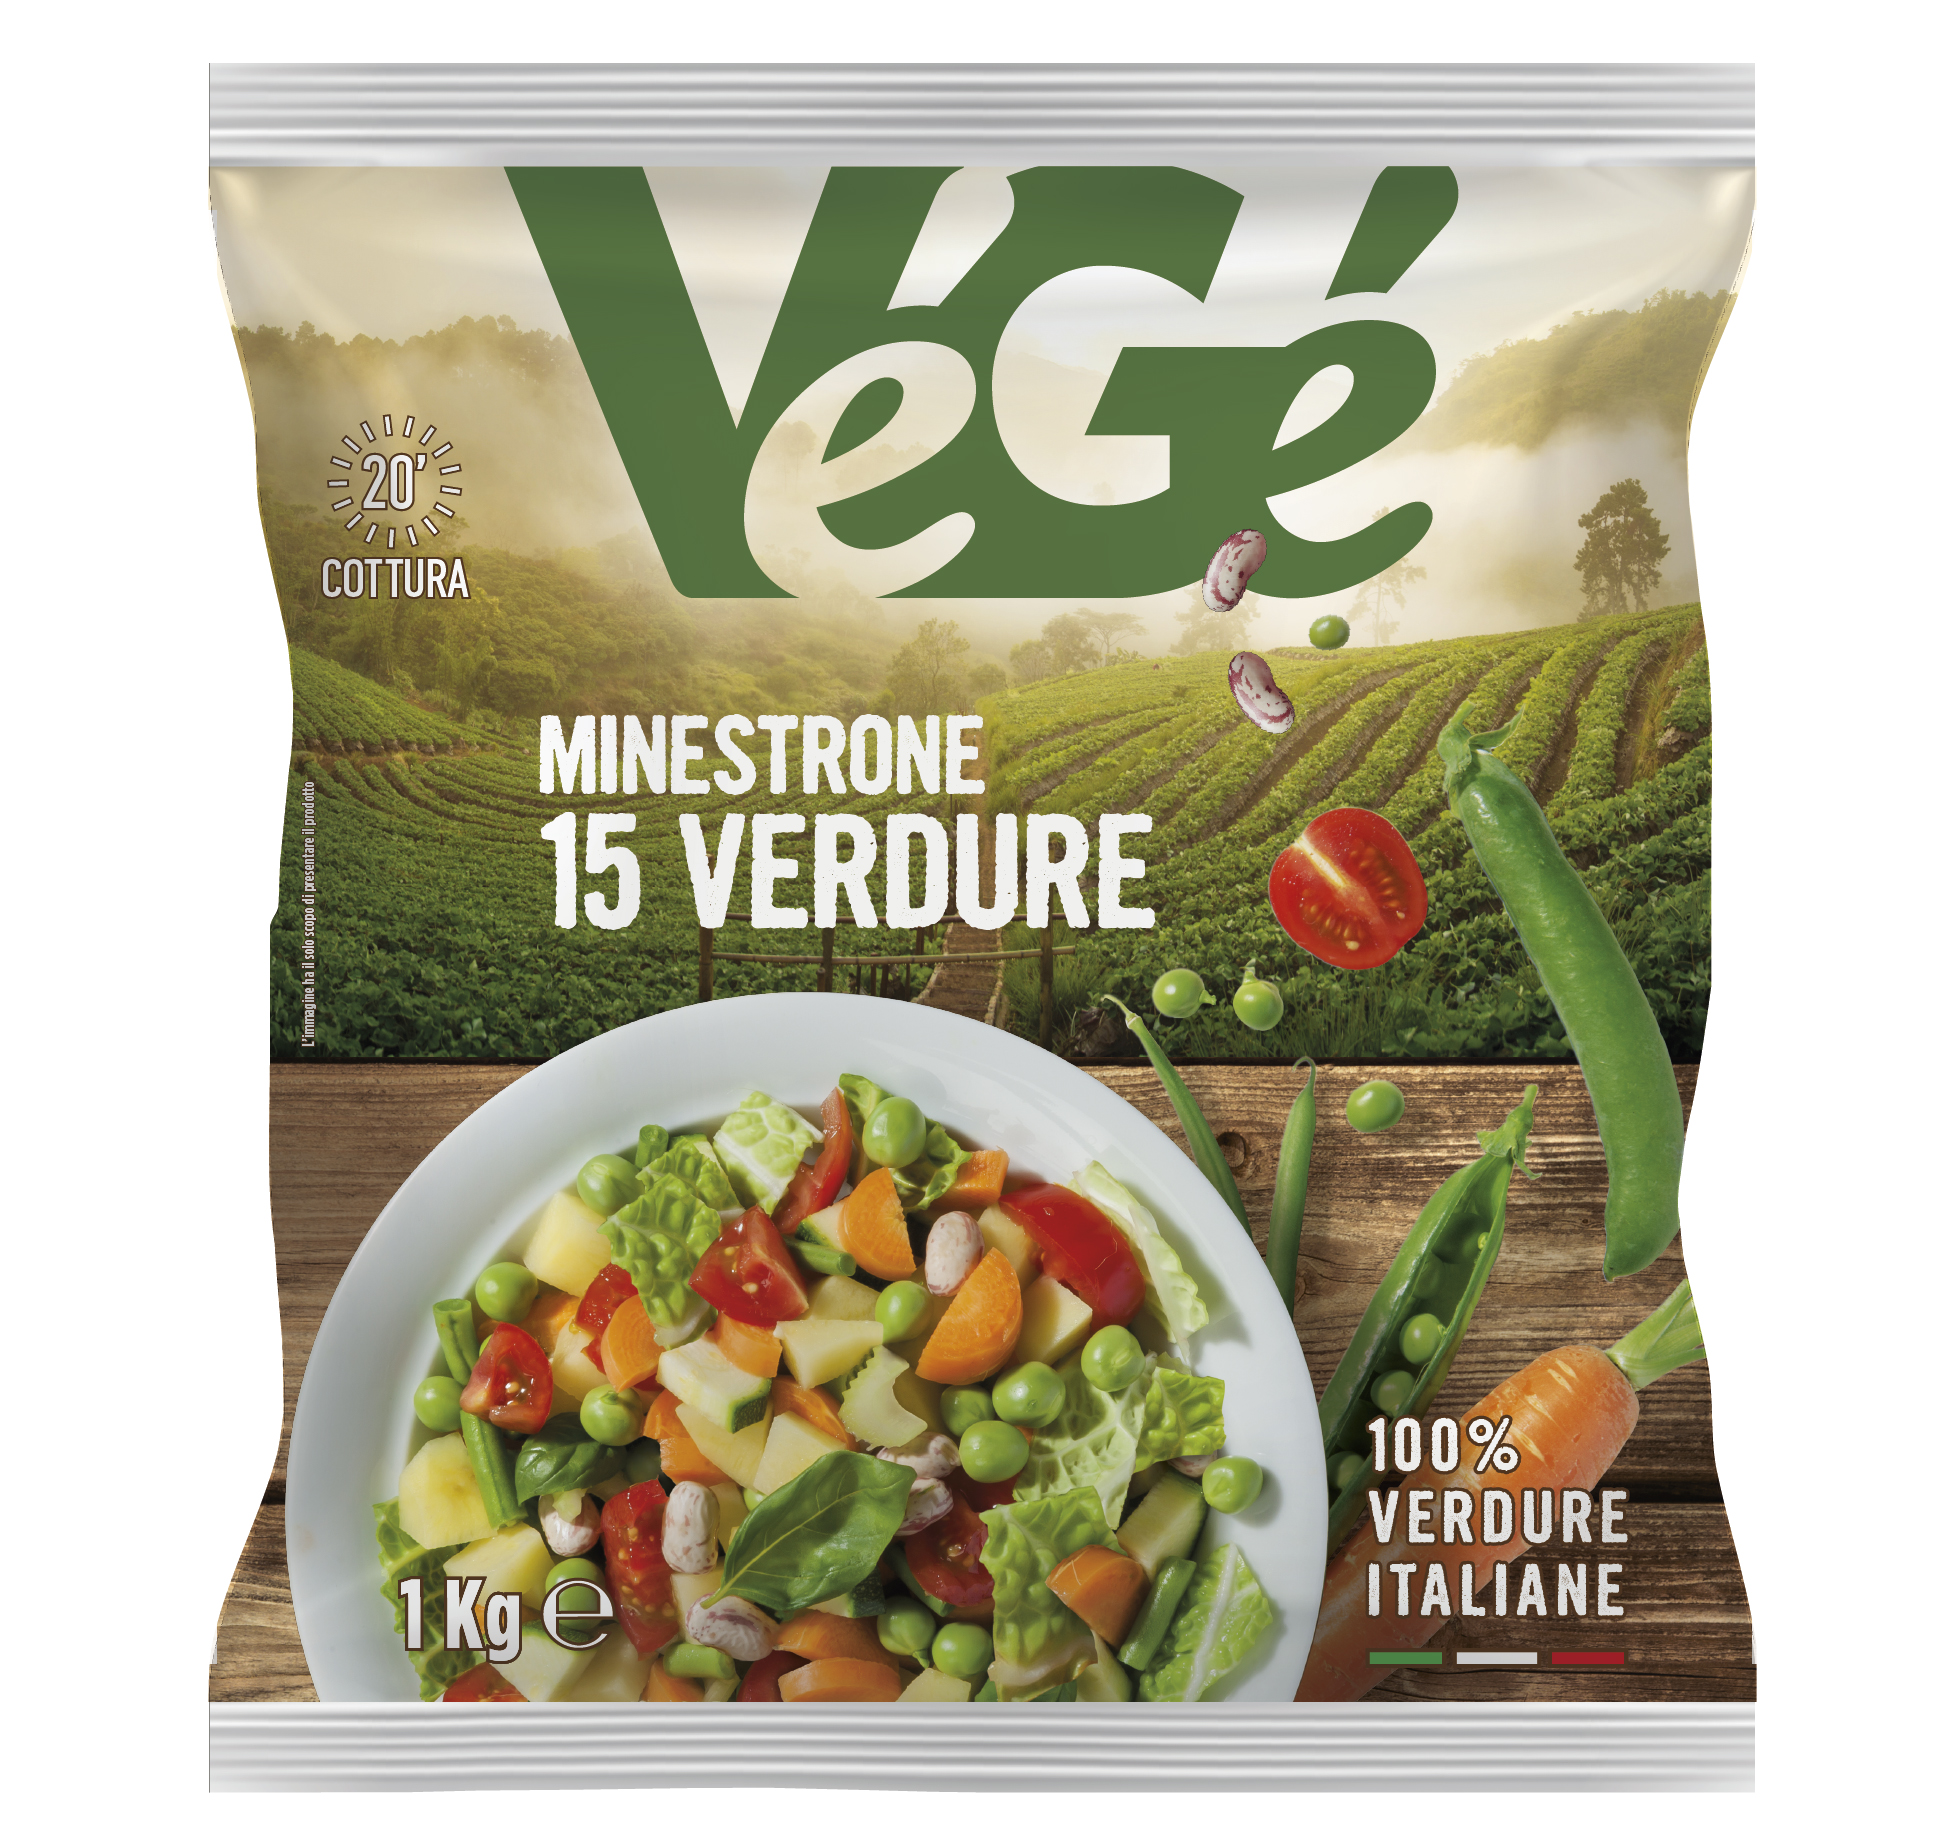 Minestrone 15 verdure Vegé GDO (Grande Distribuzione Organizzata)